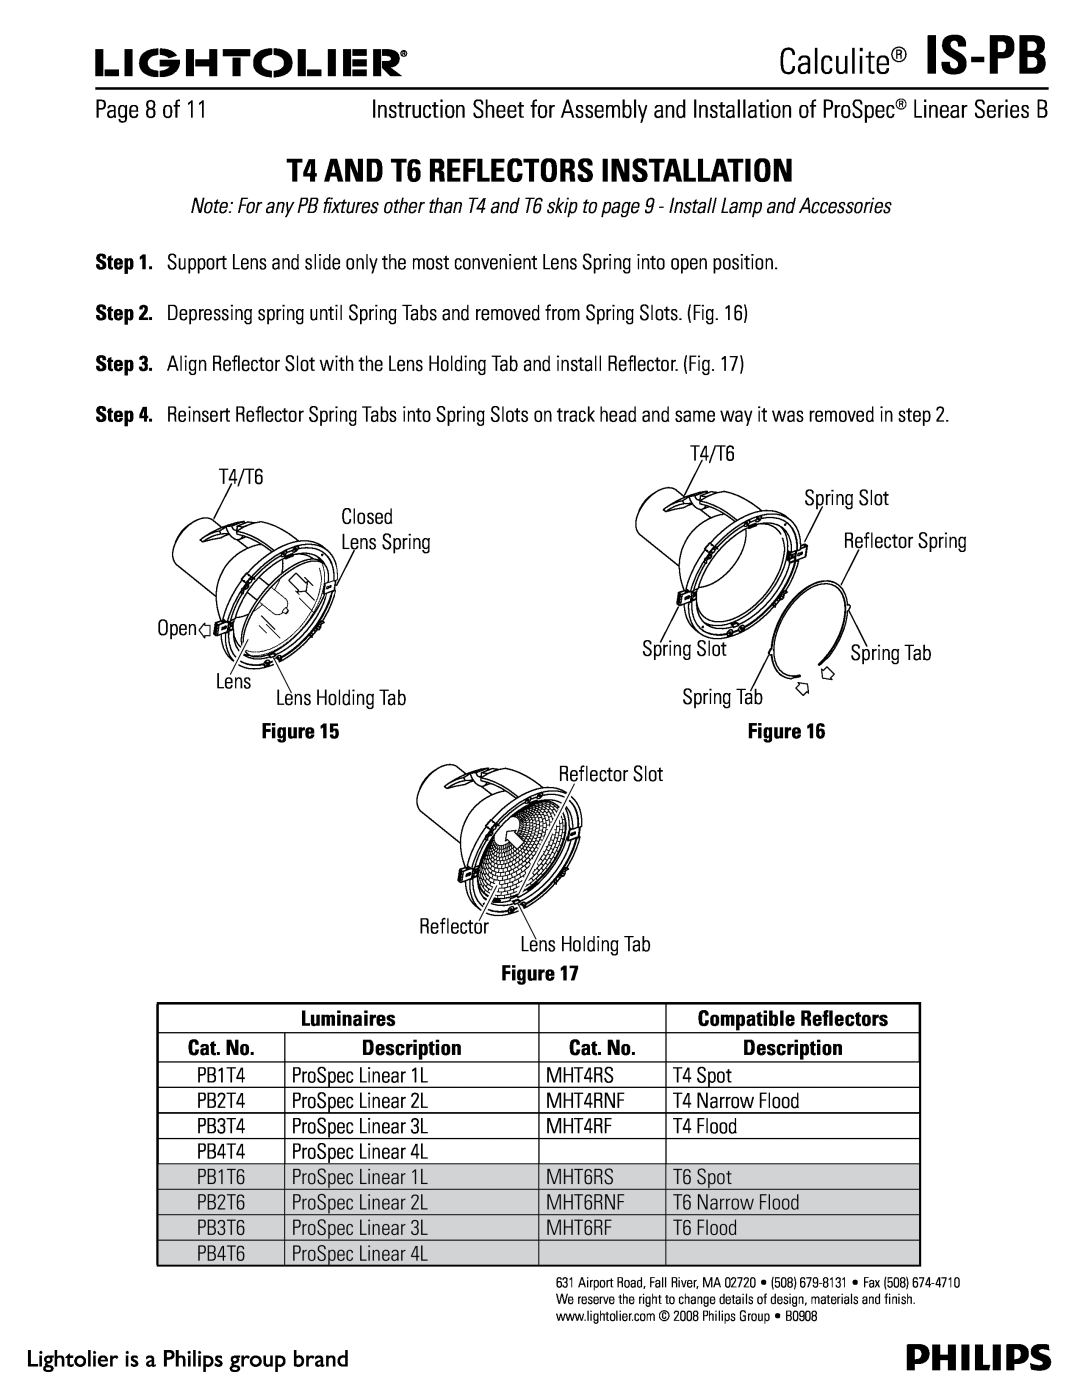 Lightolier PB manual T4 AND T6 REFLECTORS INSTALLATION, Luminaires, Description, Cat. No, $Bmdvmjuf Is-Pb 